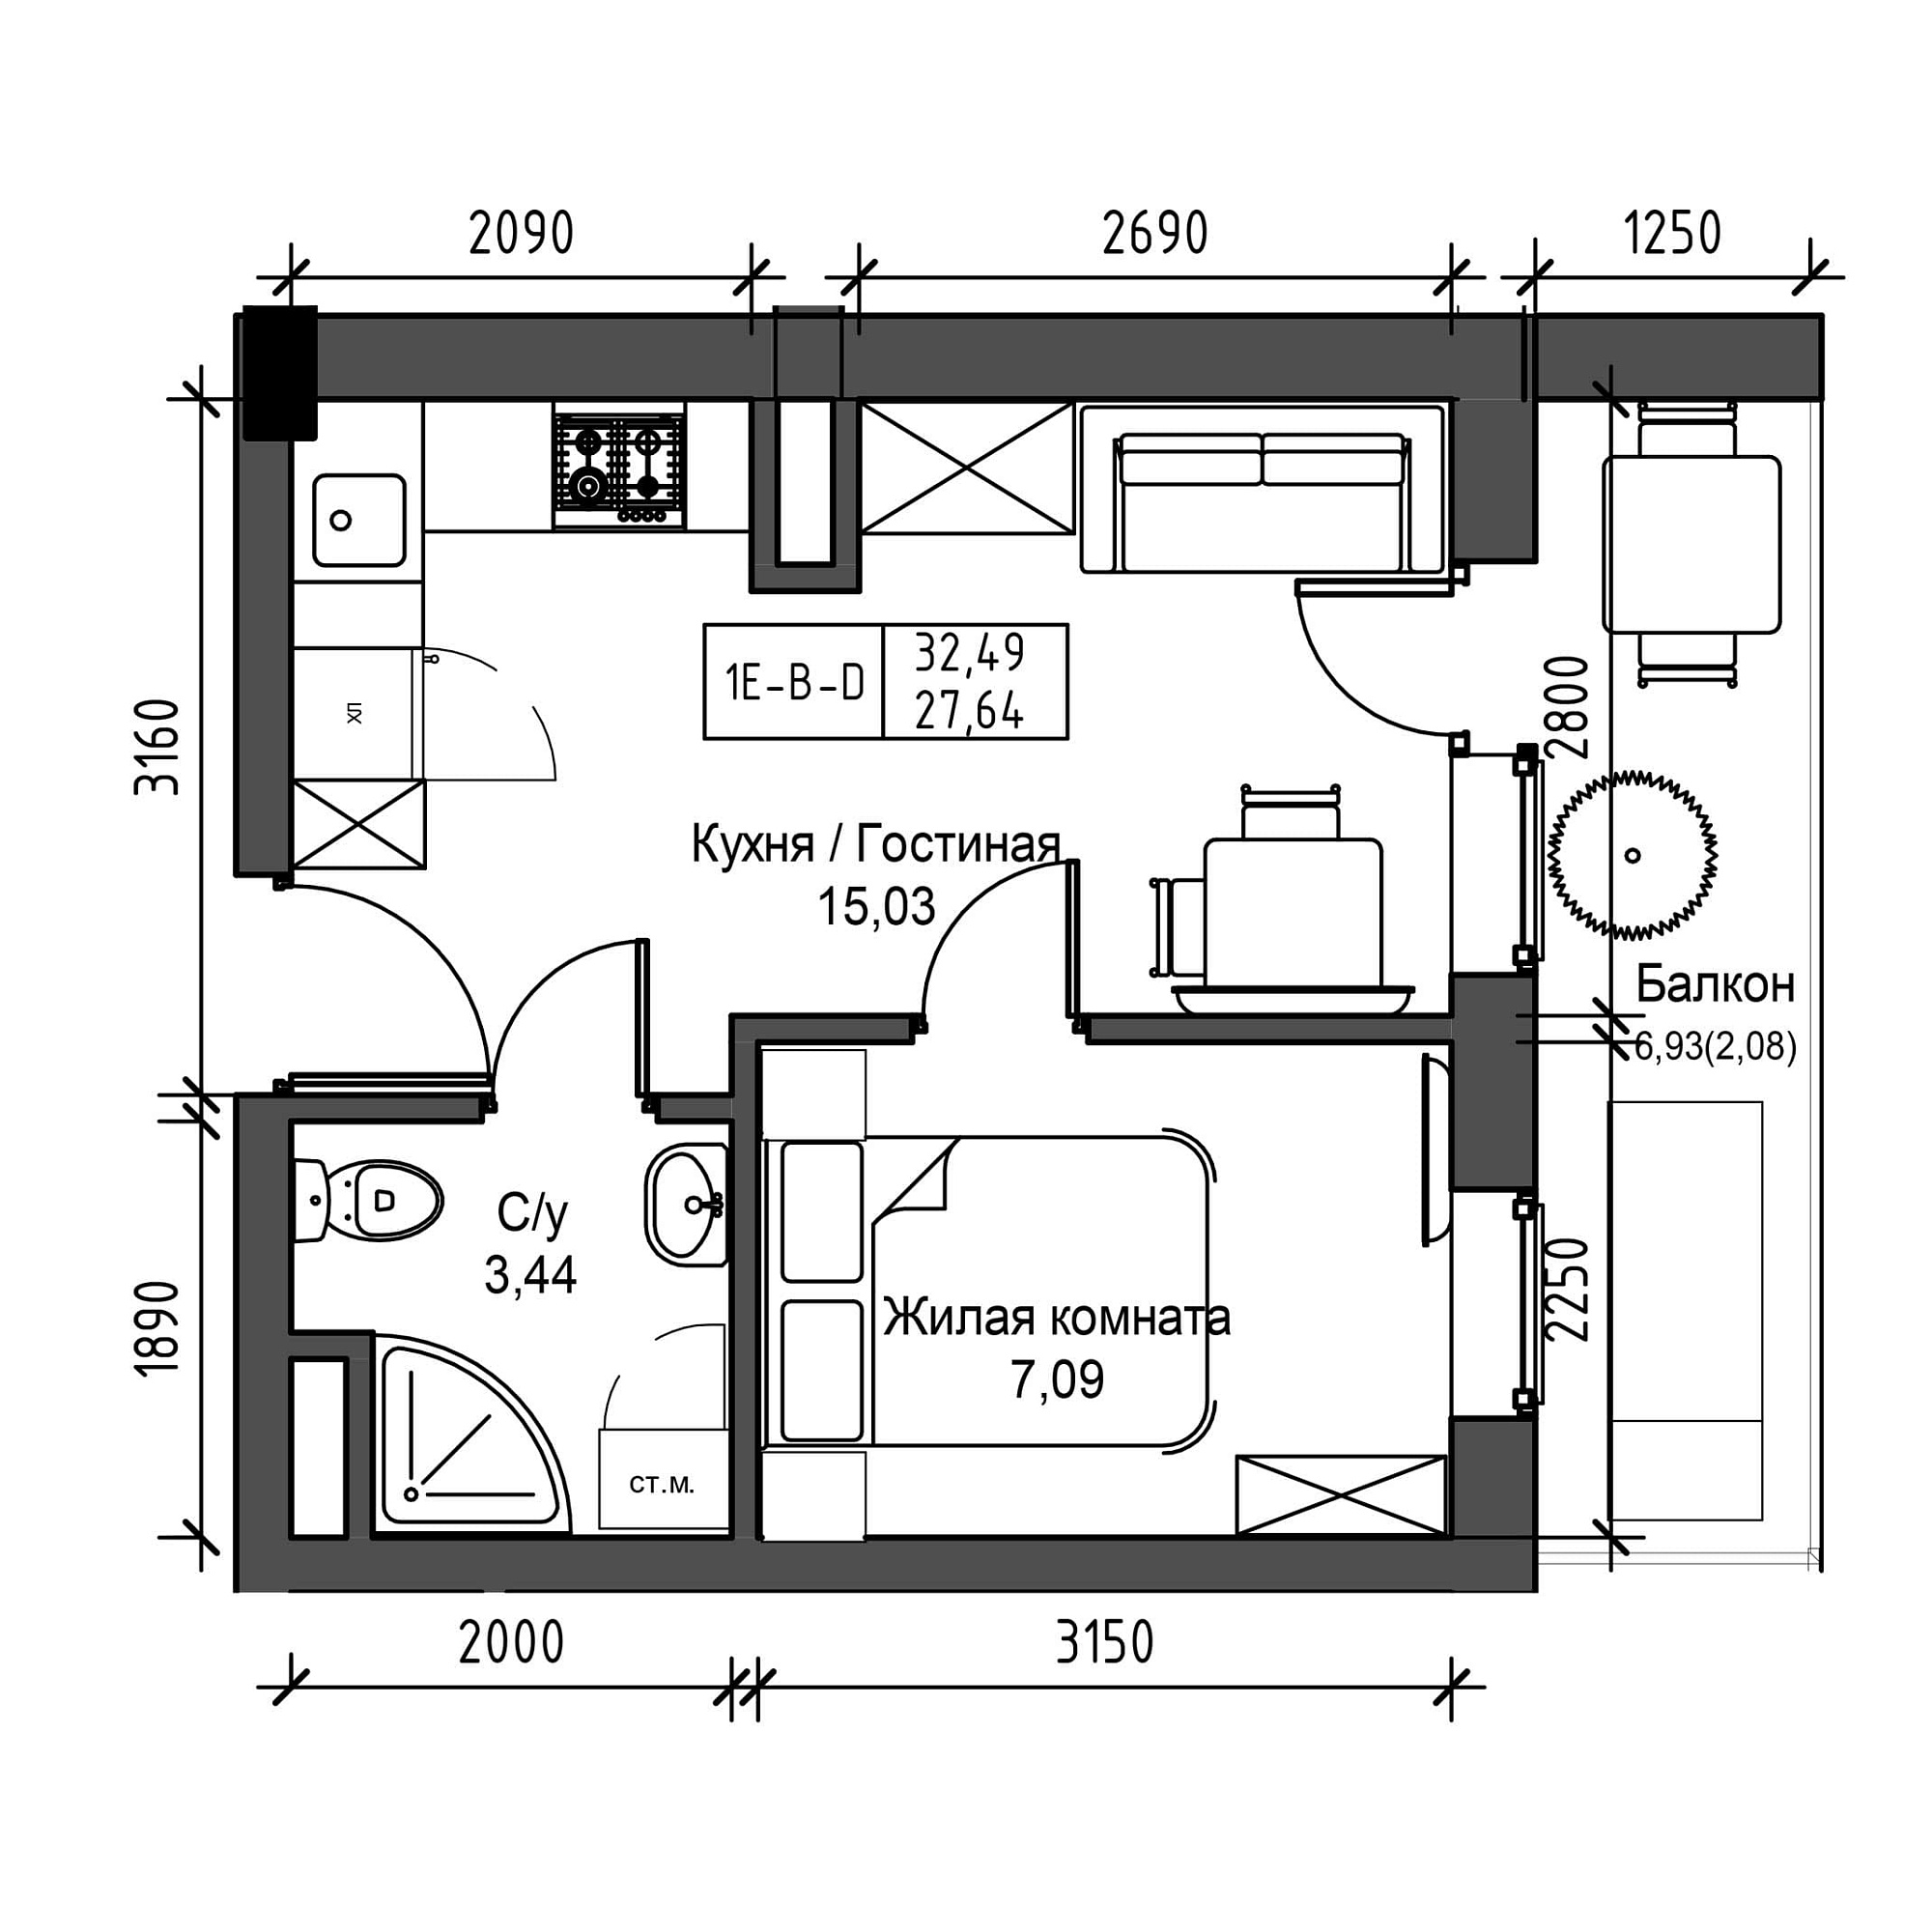 Planning 1-rm flats area 27.64m2, UM-001-06/0001.